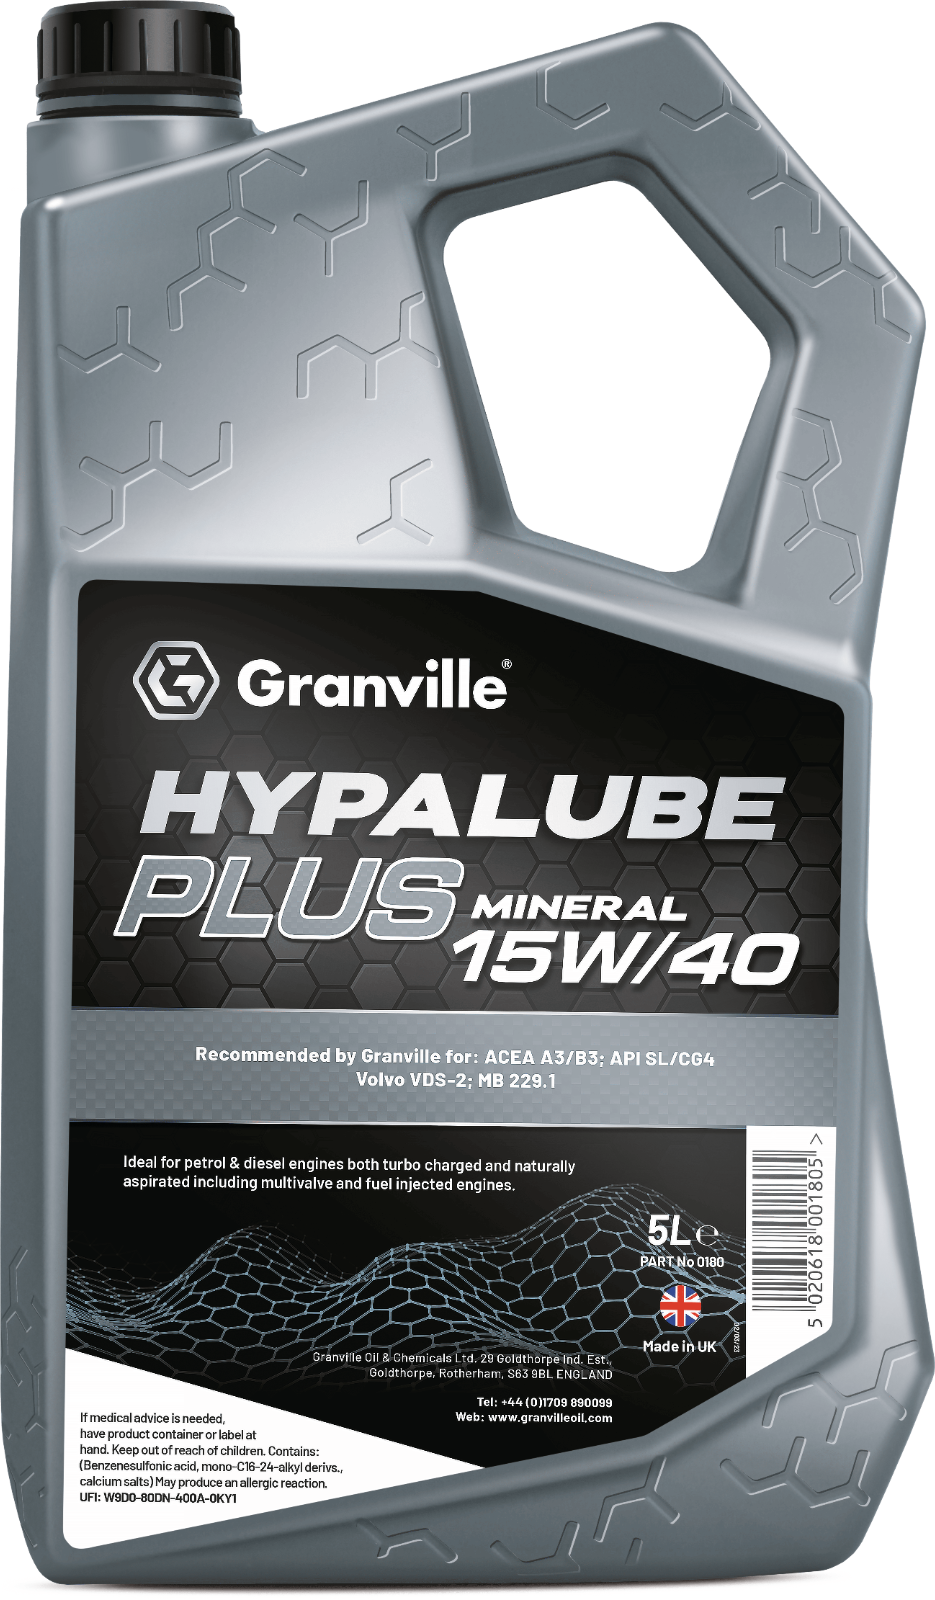 Granville Hypalube Mineral Plus 15W/40 5 Litres